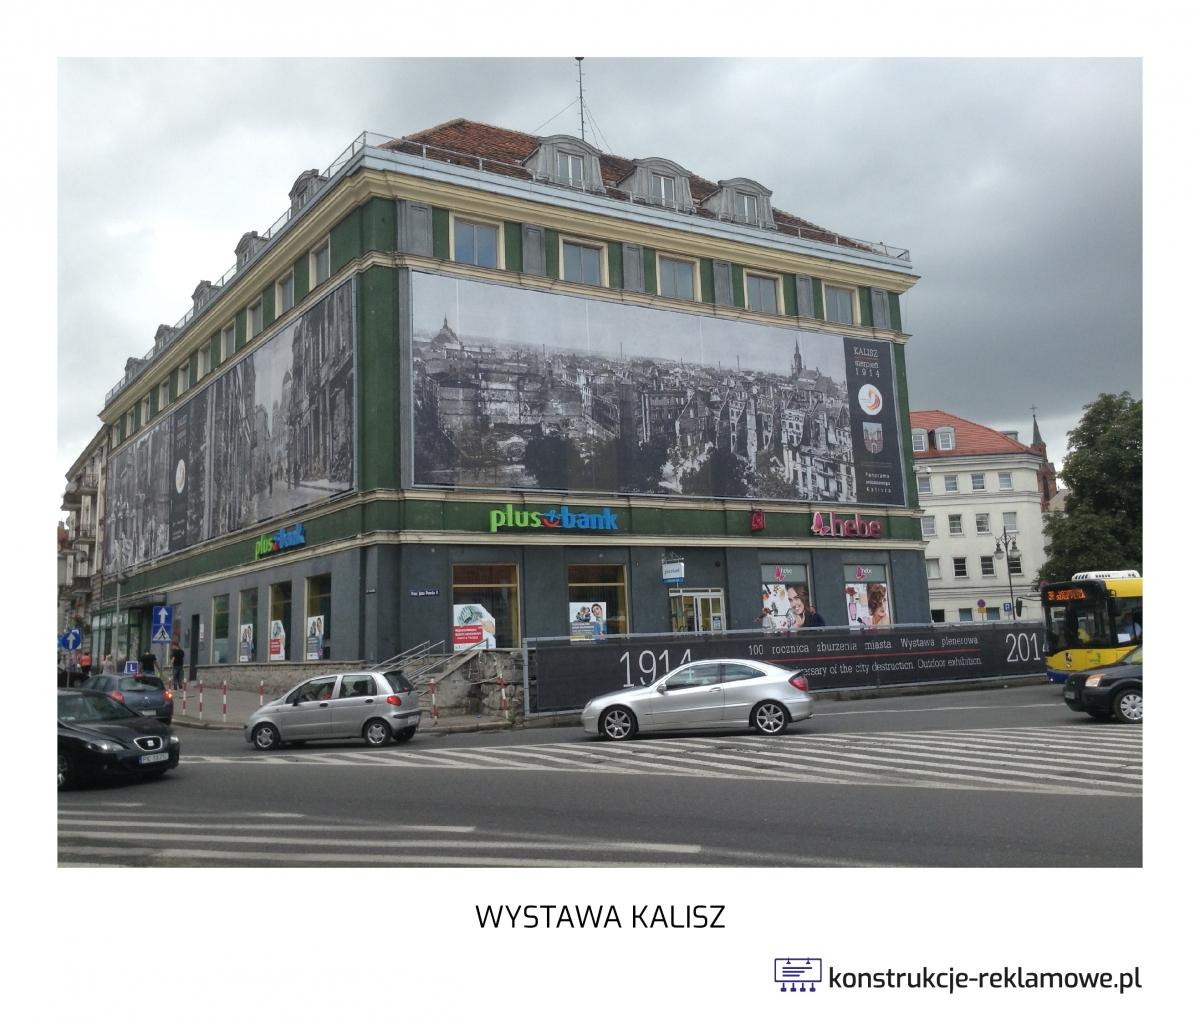 Wystawa Kalisz banery reklamowe - konstrukcje-reklamowe.pl